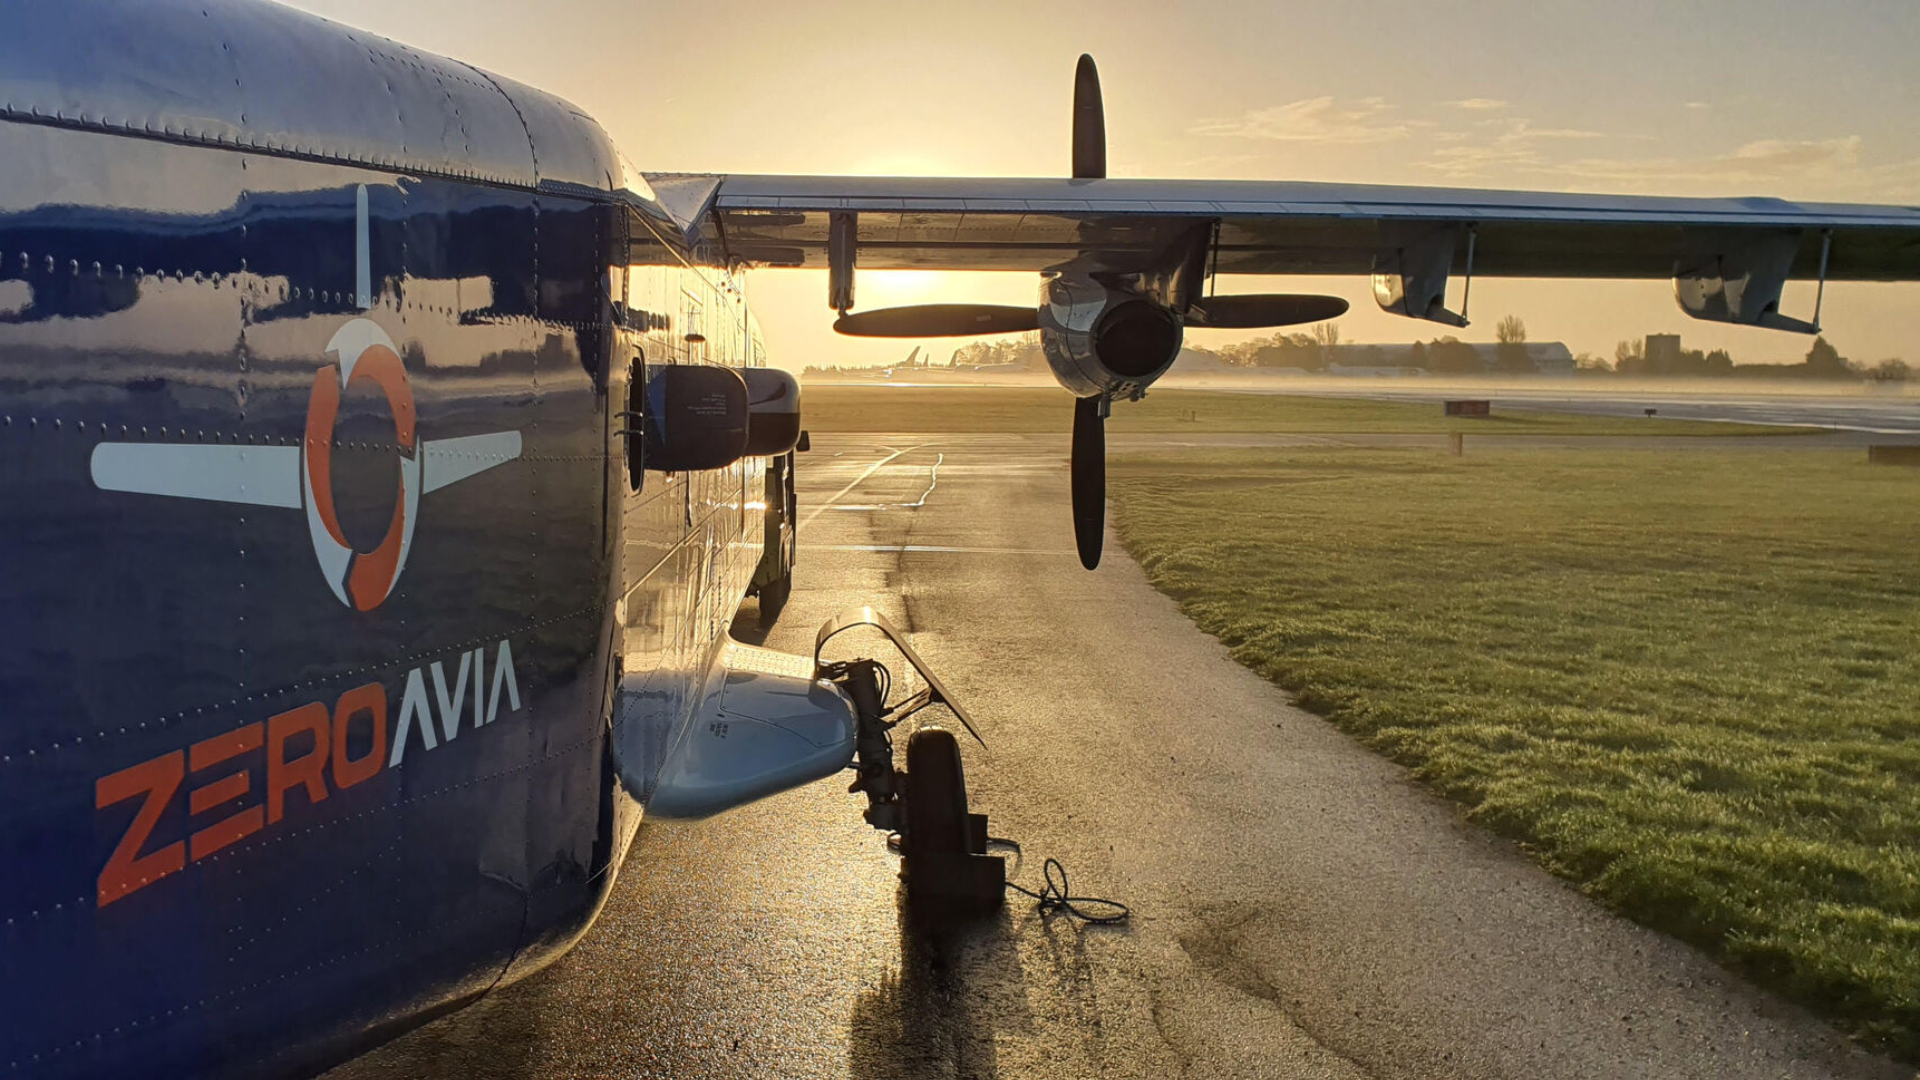 ZeroAvia’s Renewable Hydrogen-Powered Aircraft Technology To Revolutionize Aviation Industry